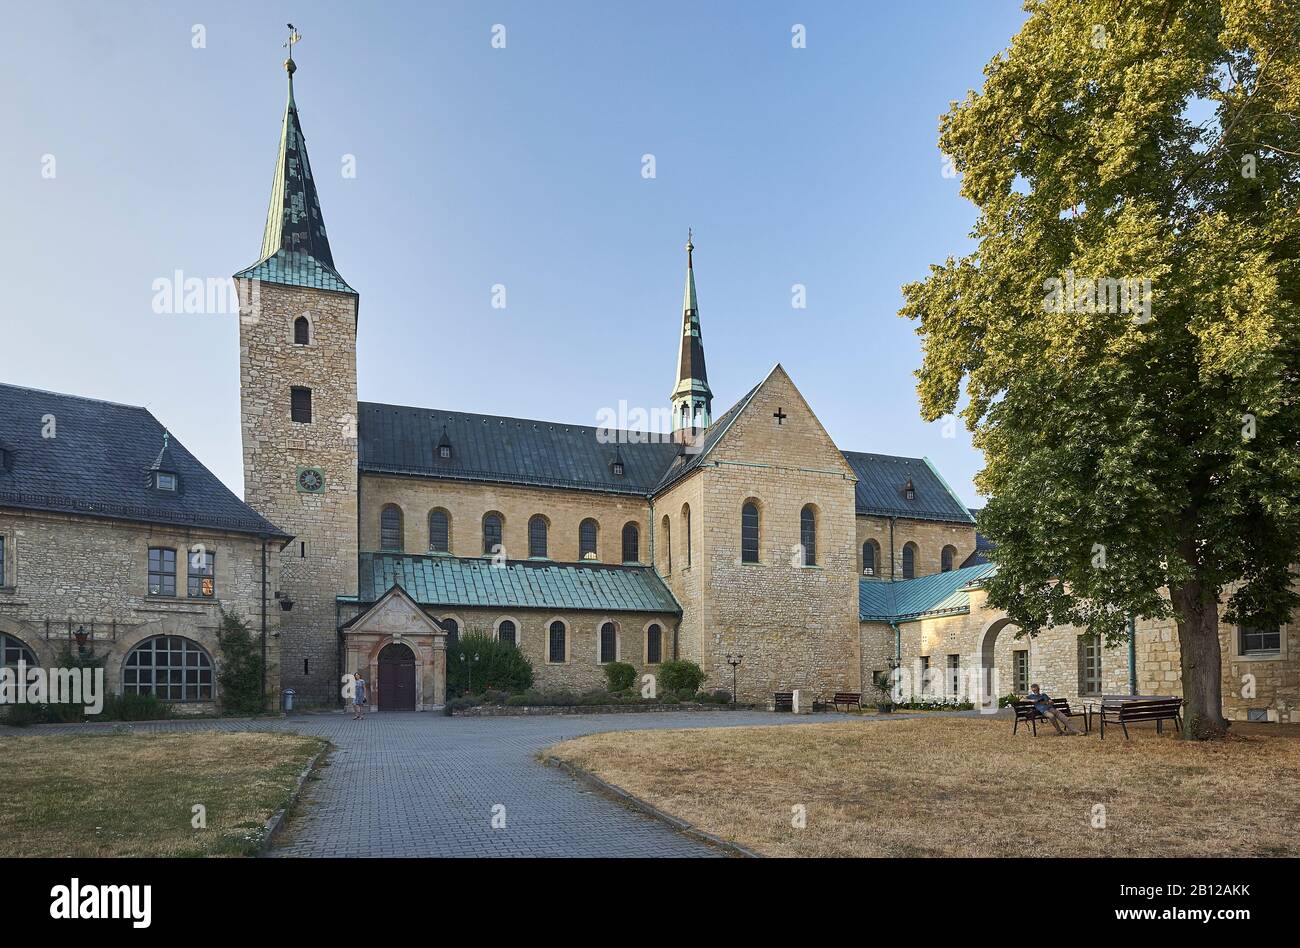 Monastery church of the Benedictine monastery Huysburg, near Halberstadt, Harz district, Saxony-Anhalt, Germany Stock Photo